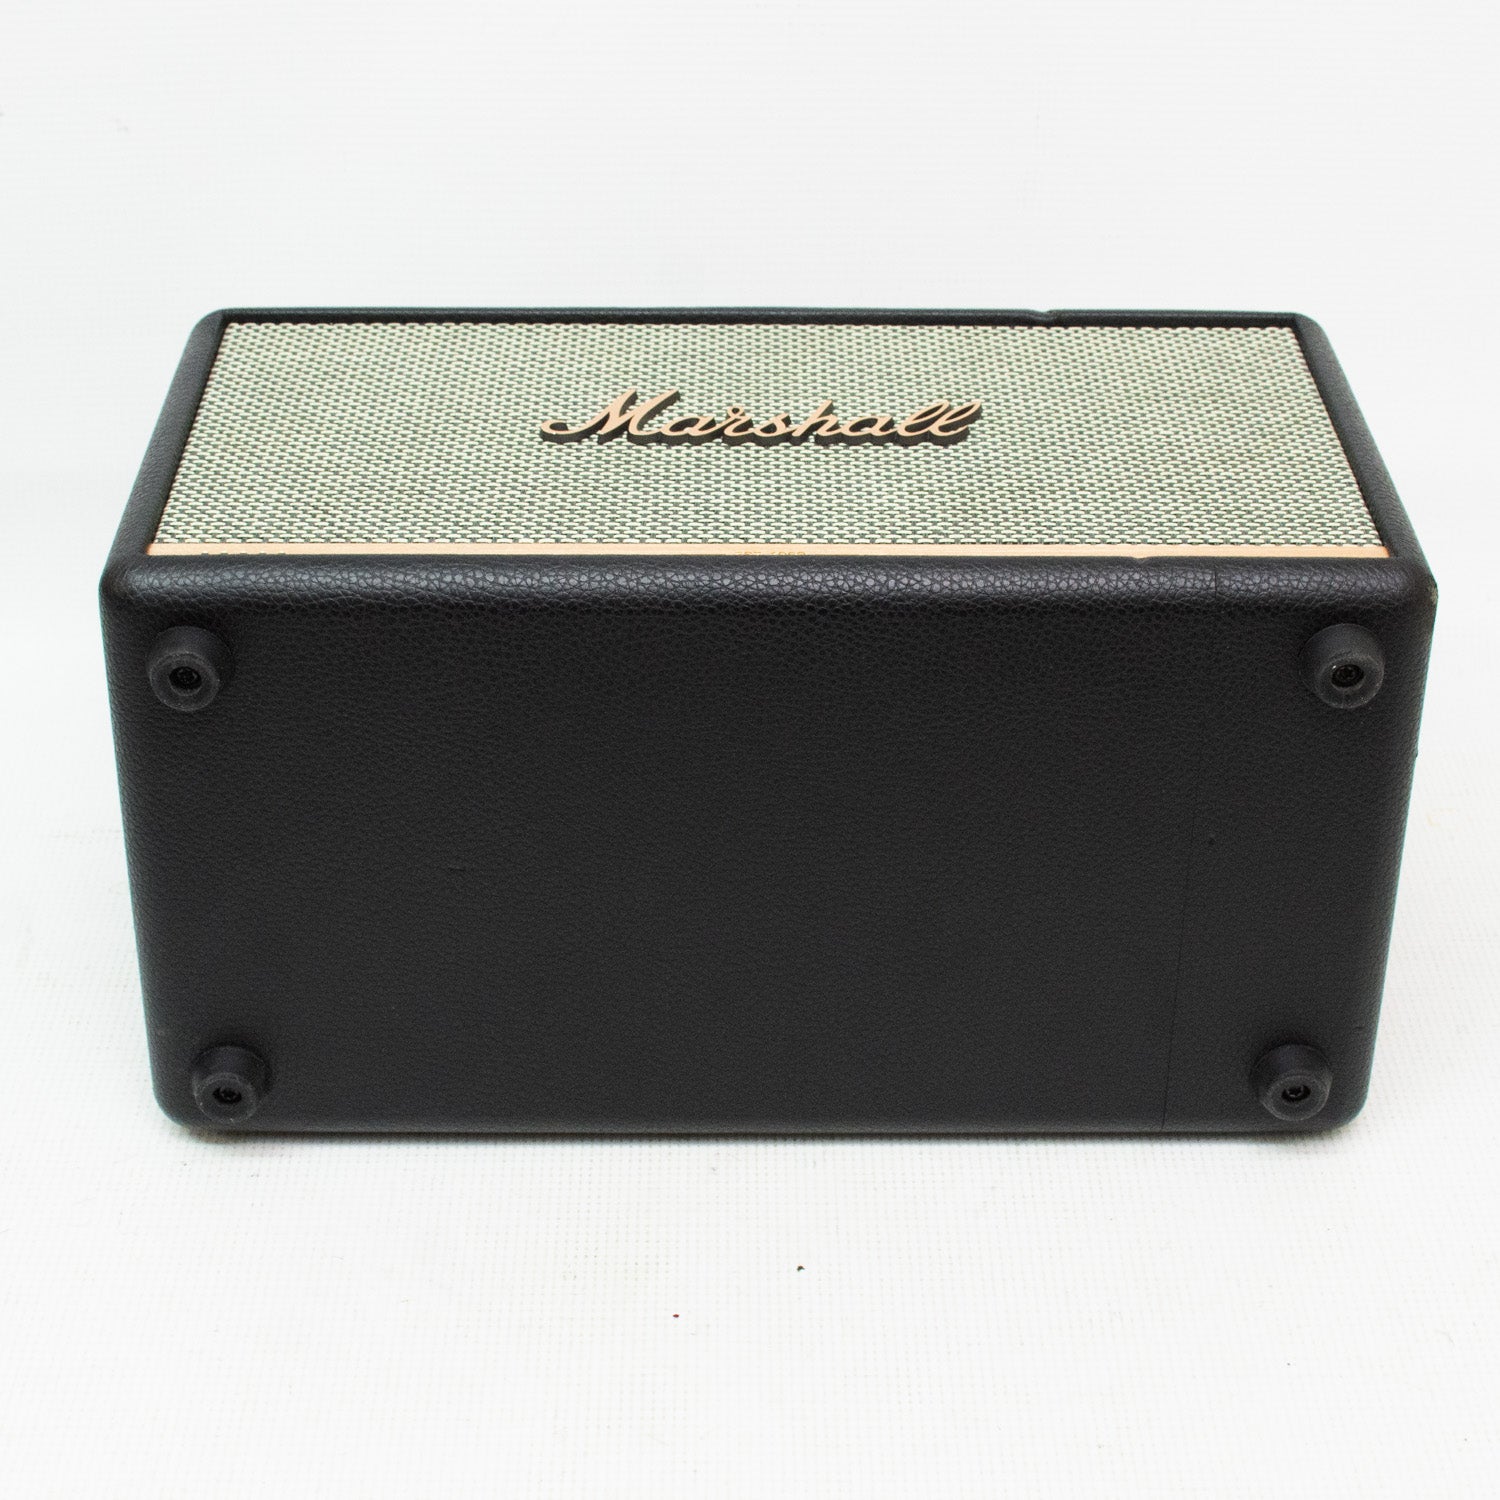 Marshall Stanmore II Wireless Bluetooth Speaker